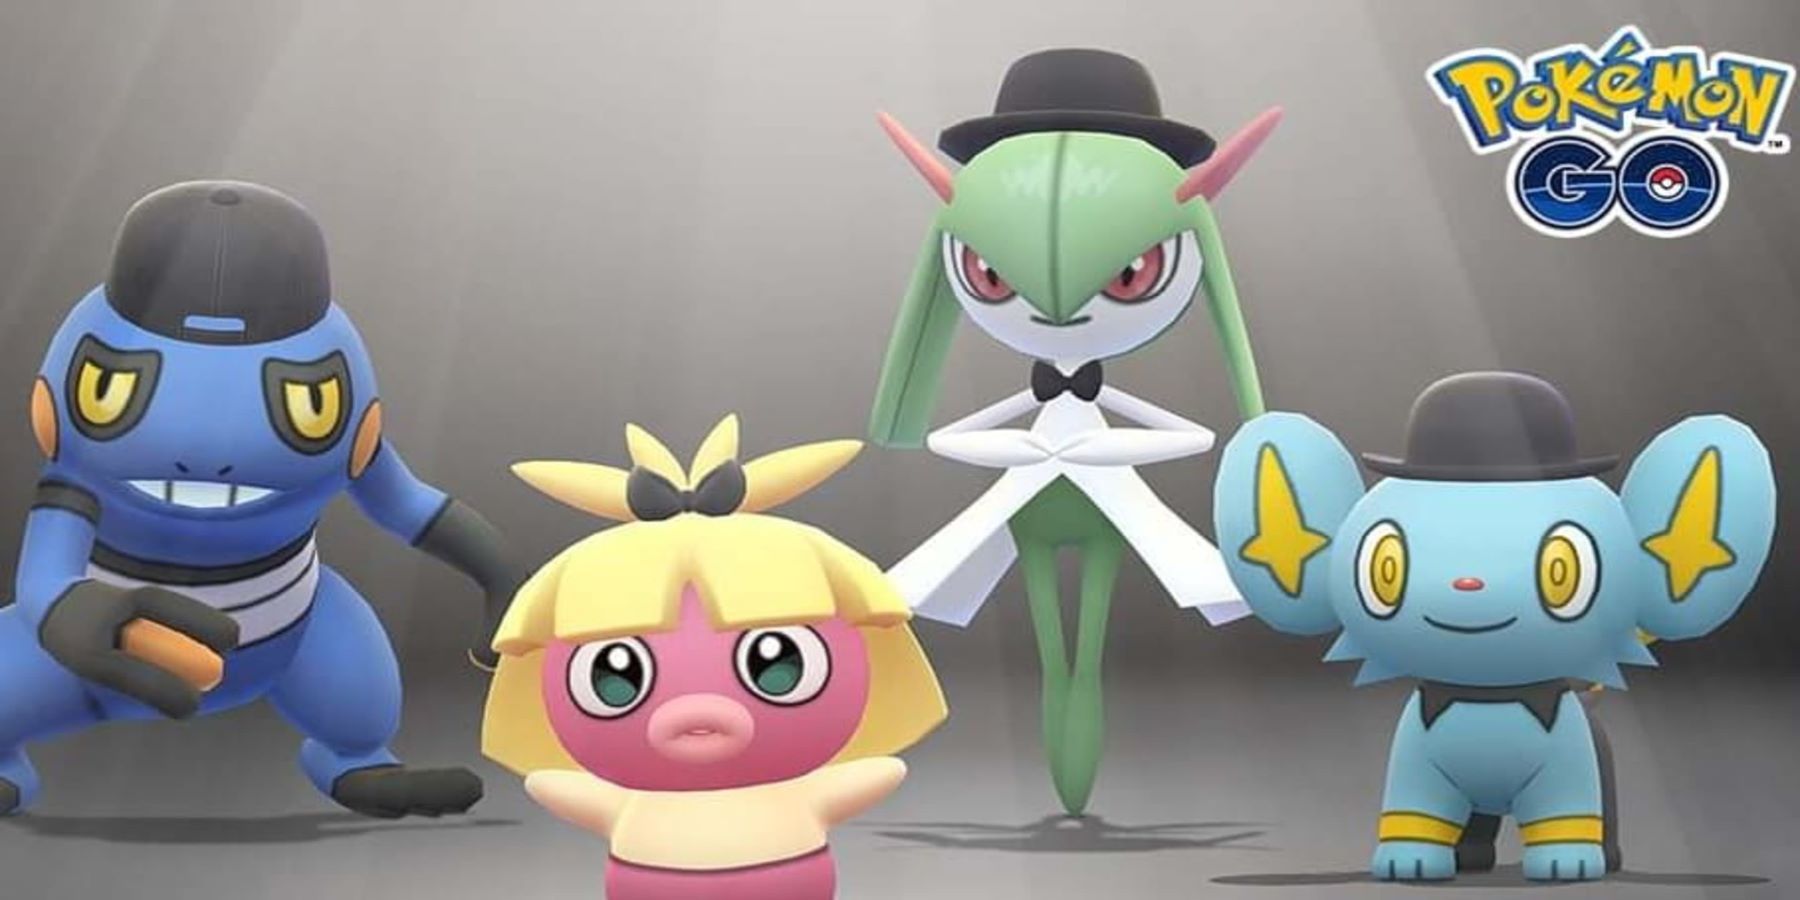 Pokemon Go’s Fashion Week -evenement benadrukt een fout in karakteraanpassing